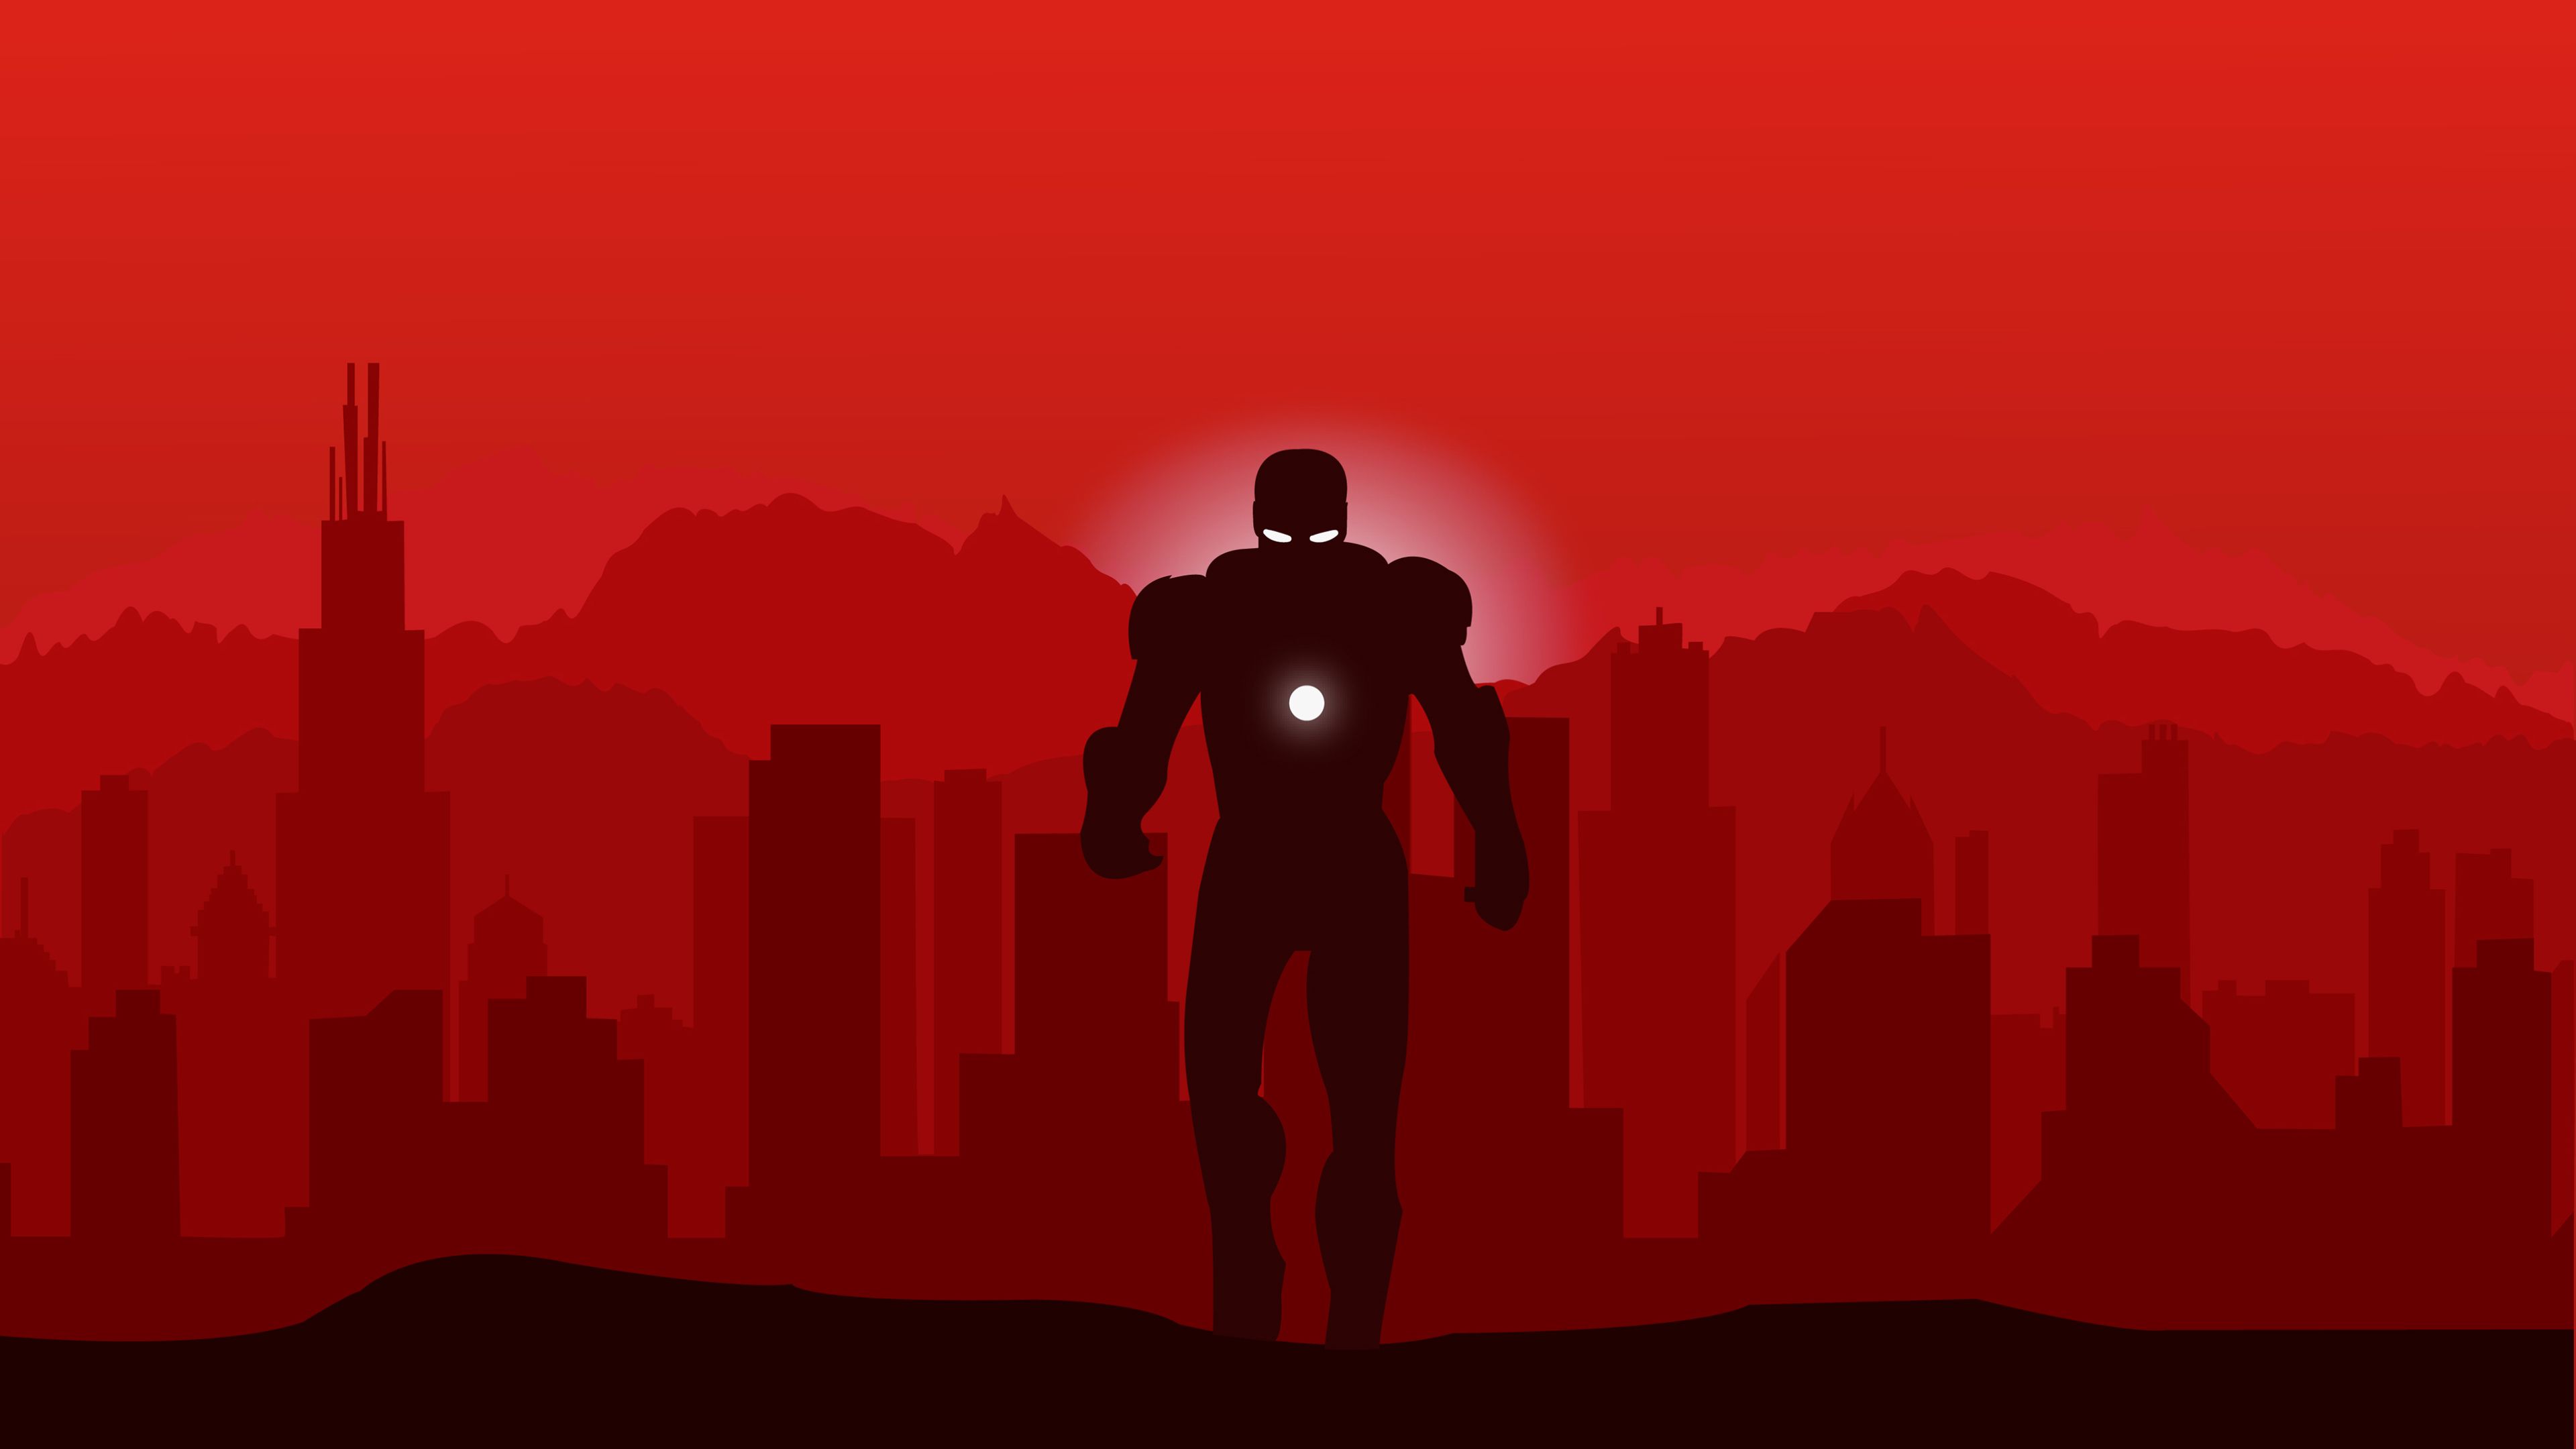 Marvel Iron Man Minimalist 4K Wallpaper, HD Minimalist 4K Wallpaper, Image, Photo and Background